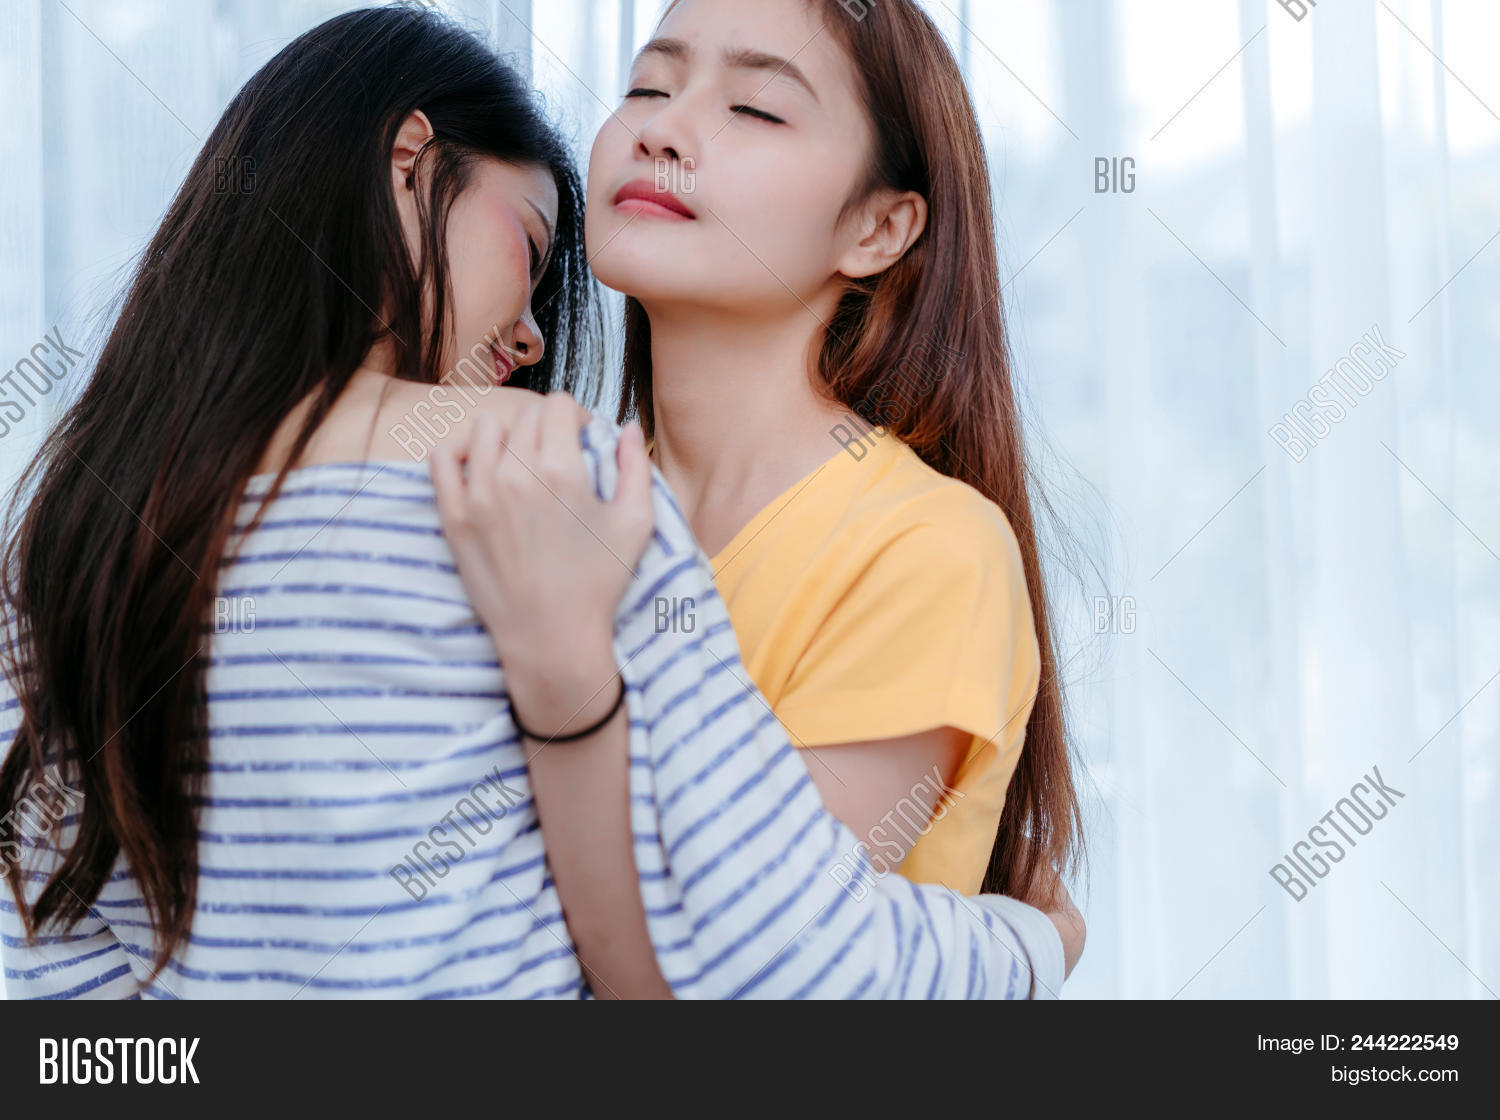 brigitte lewis add lesbian asians sex photo